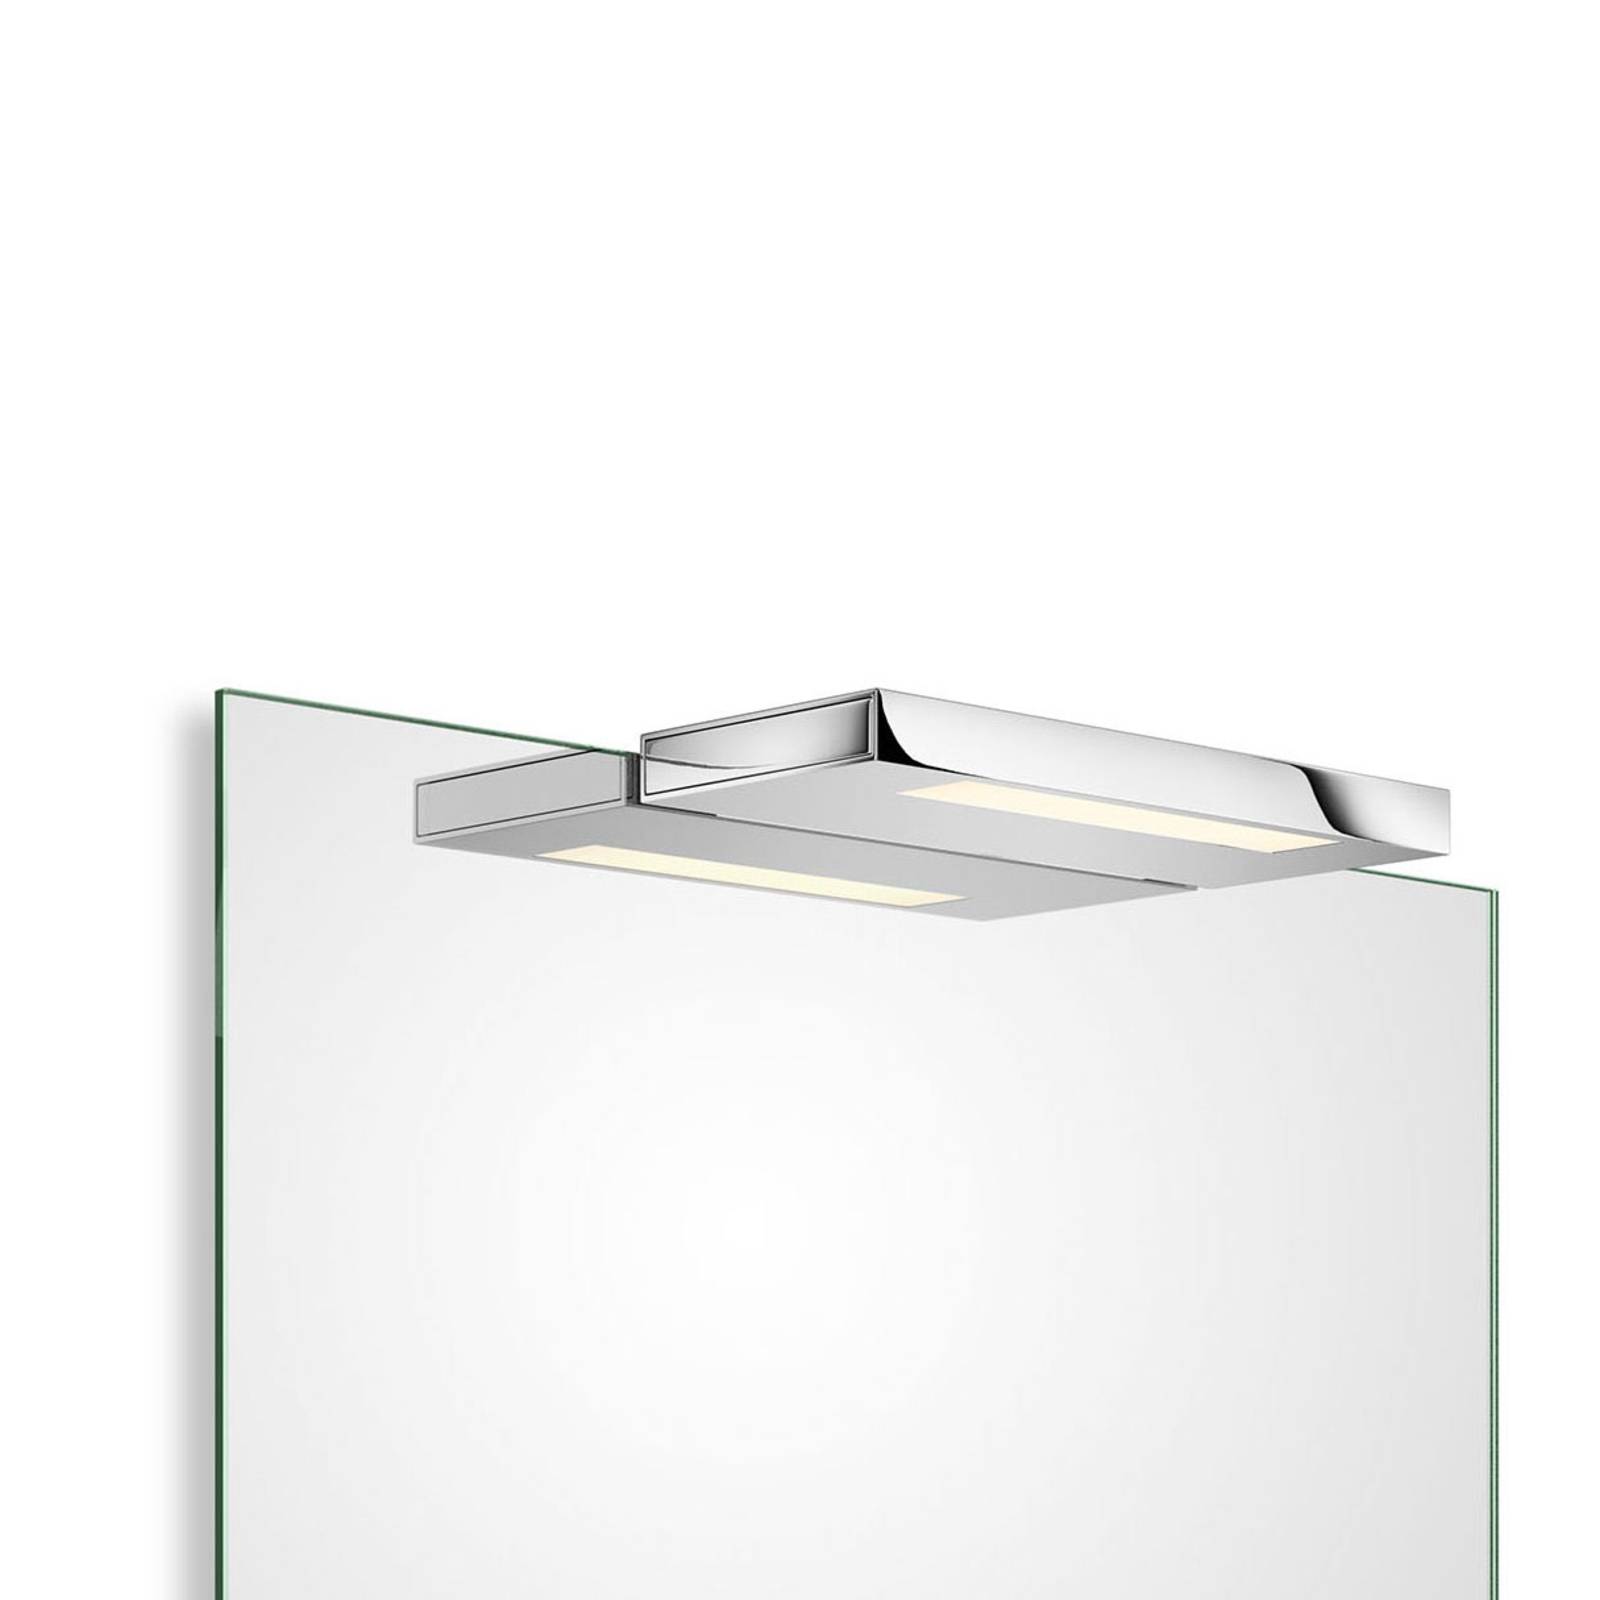 Decor Walther Slim 1-24 N lampe miroir LED chromée